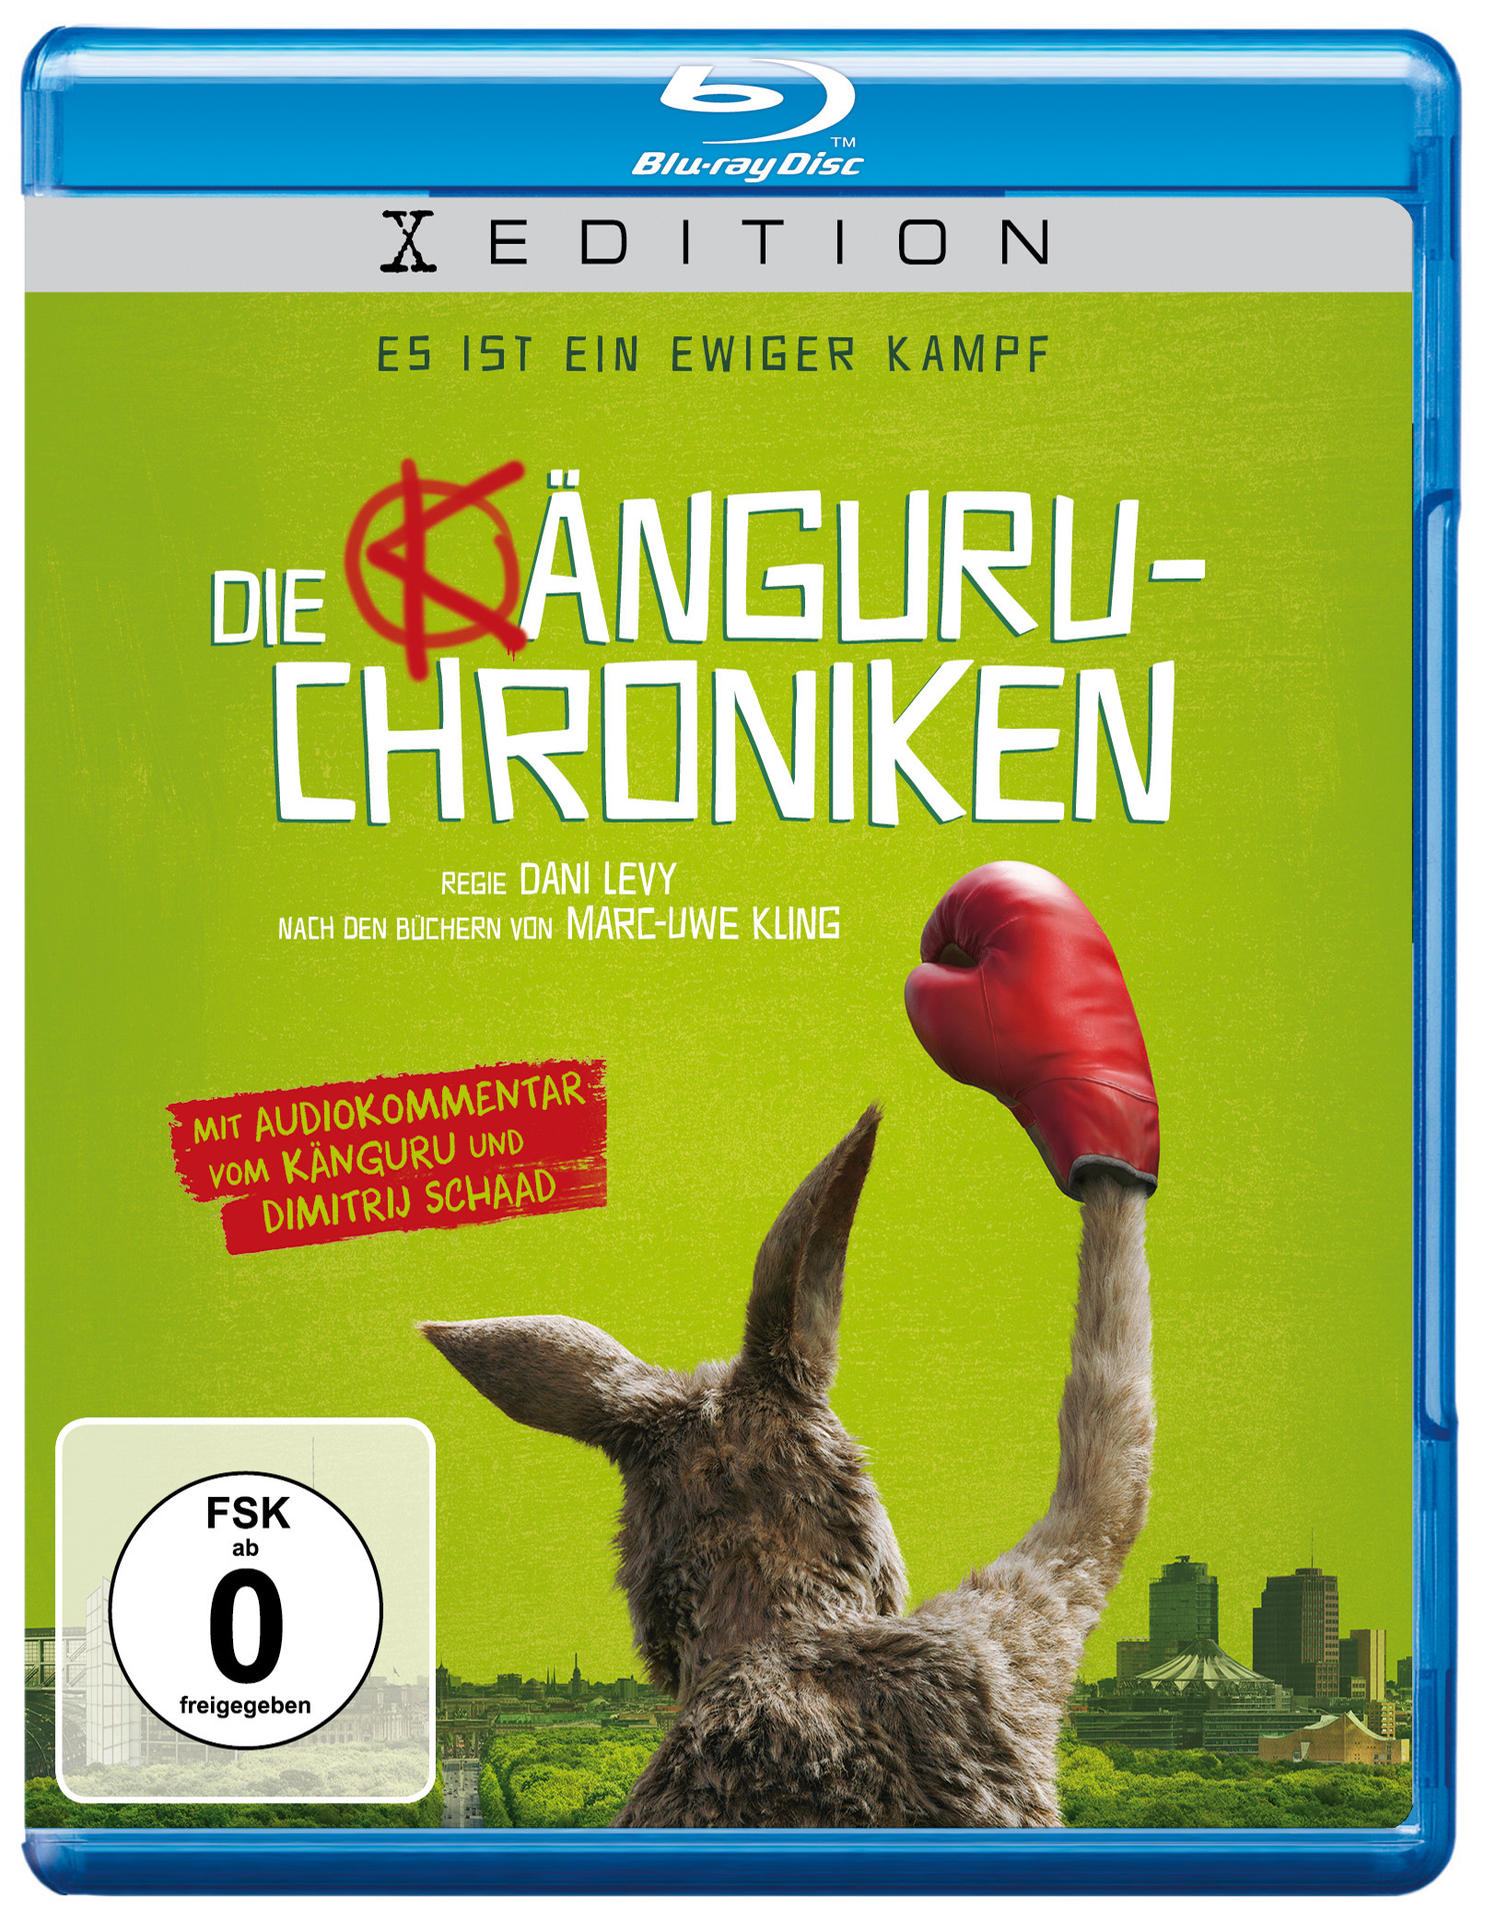 Känguru-Chroniken Blu-ray Die